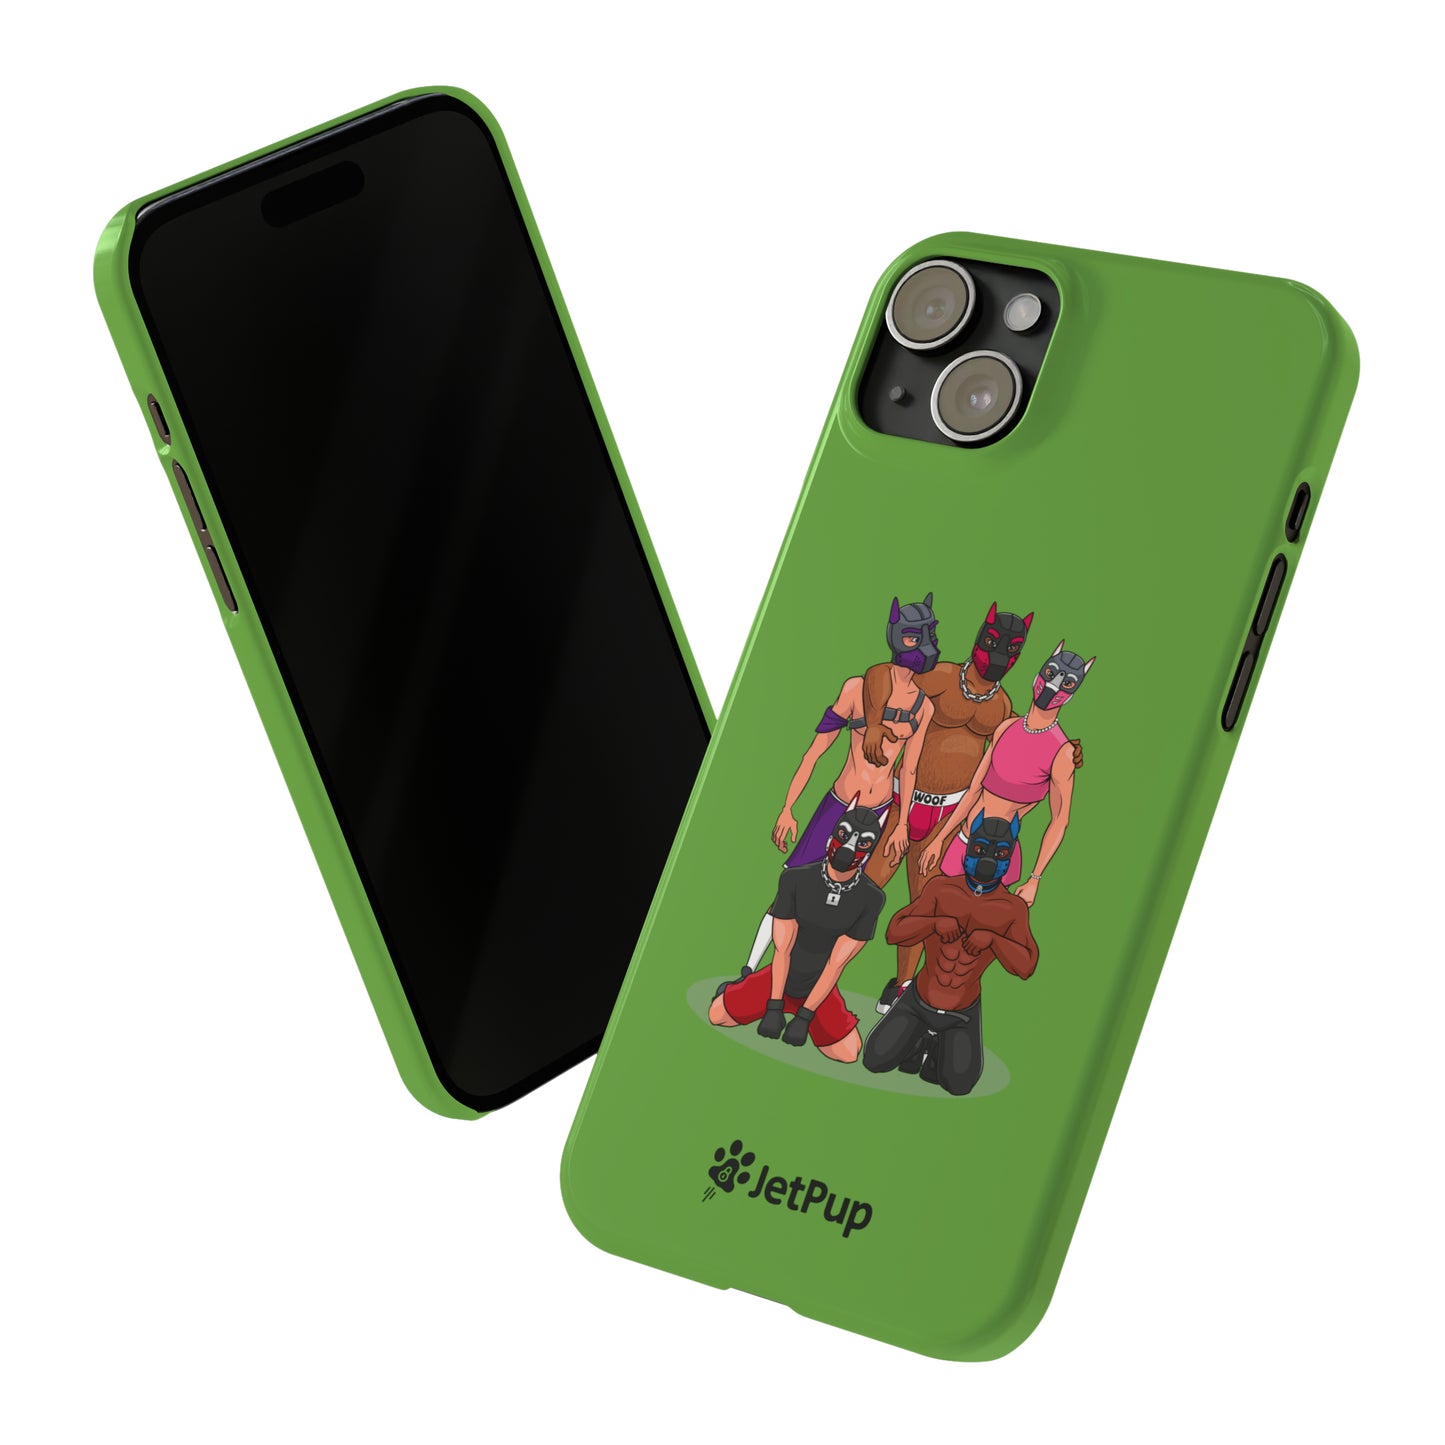 JetPack Slim iPhone Cases - Green